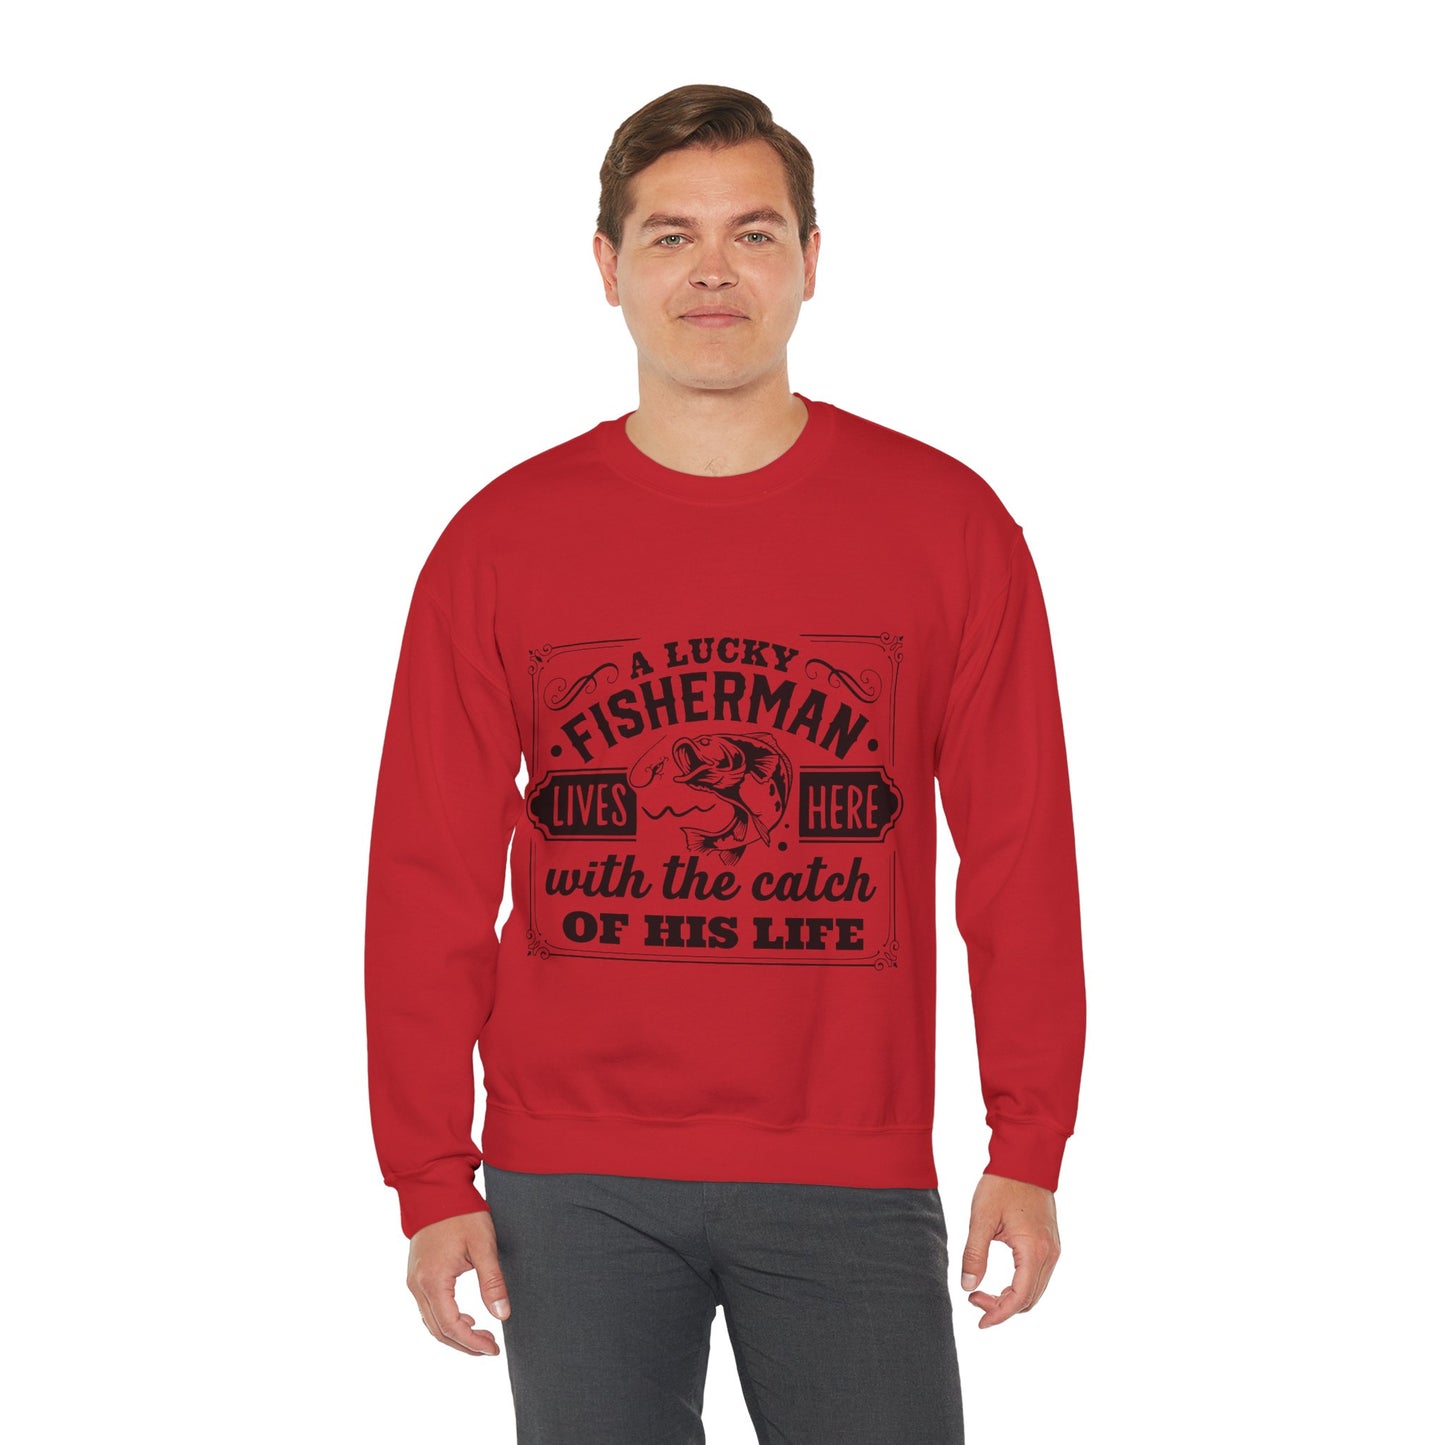 Lucky fisherman lives here - Unisex Heavy Blend™ Crewneck Sweatshirt